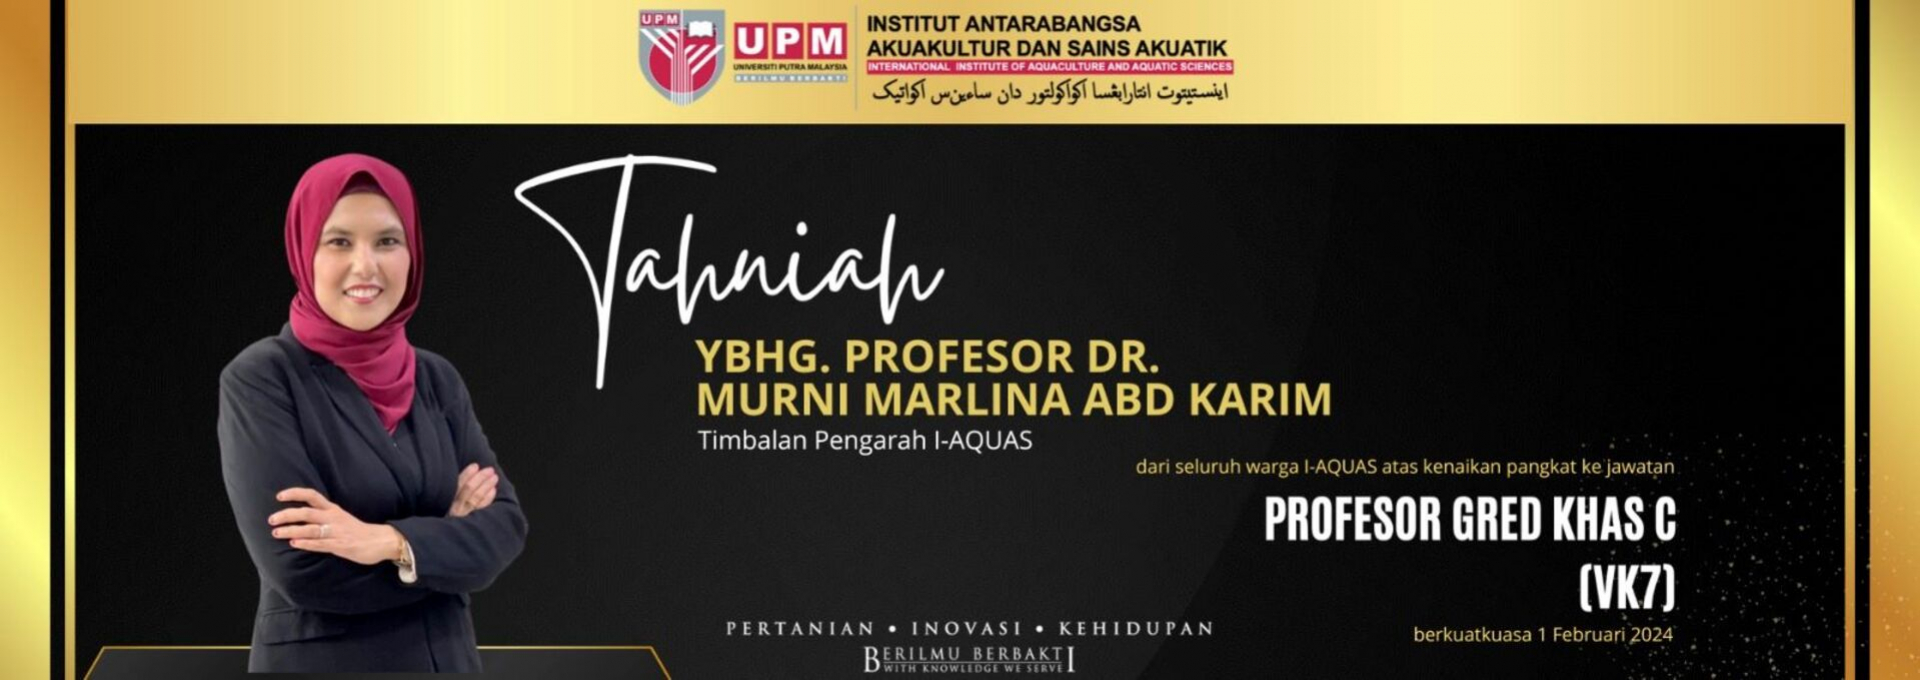 Congratulation ! PROF DR MURNI